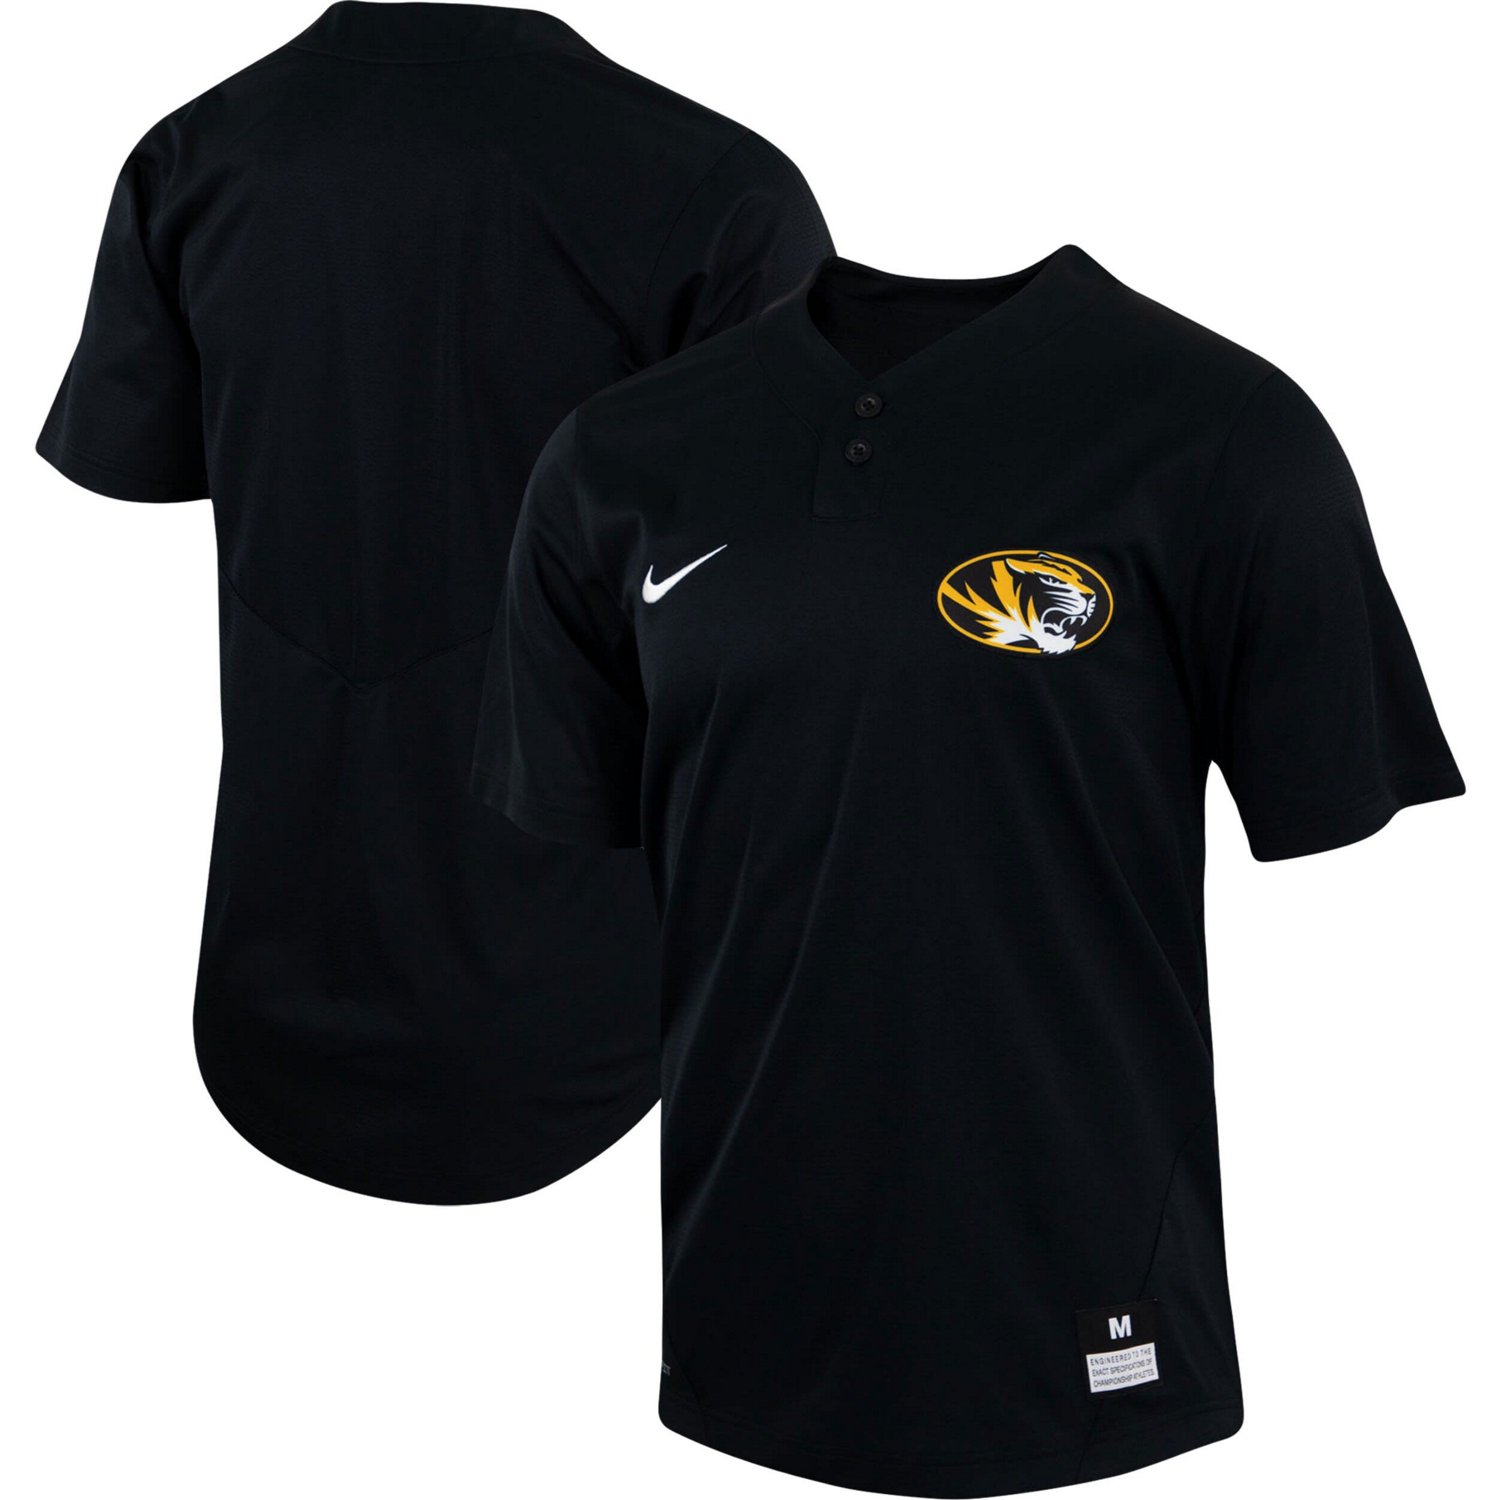 Nike Missouri Tigers Two-Button Replica Baseball Jersey | Academy